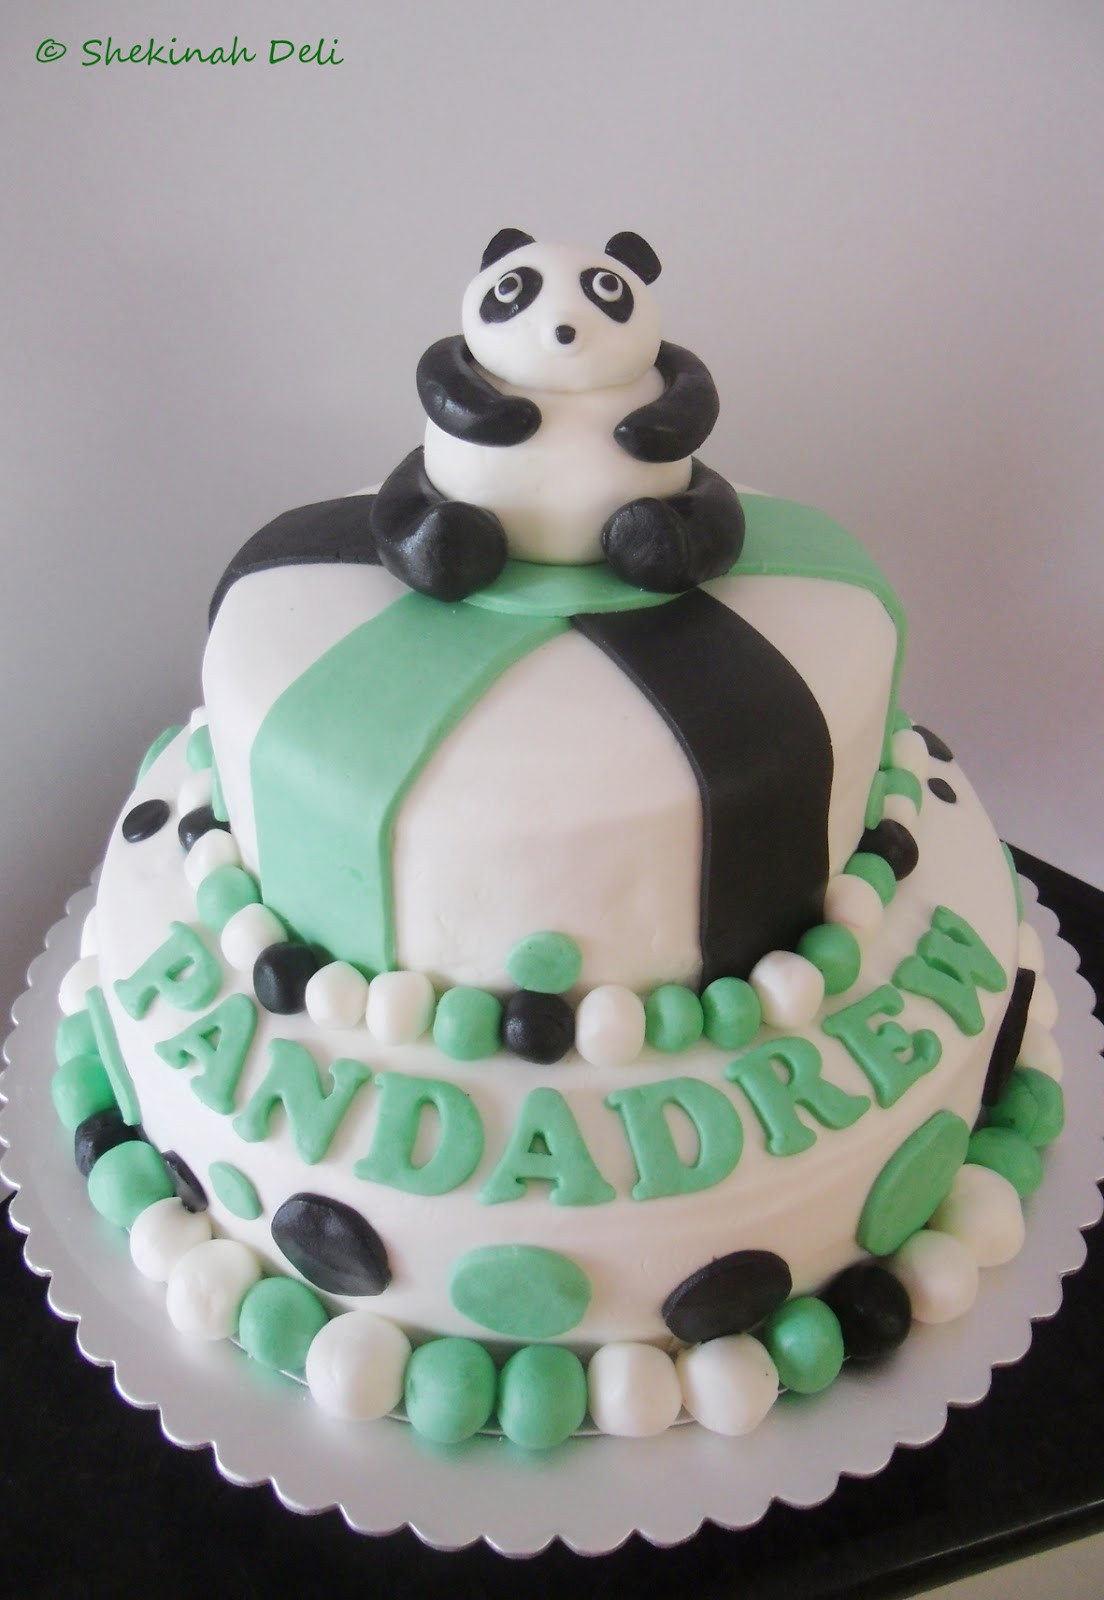 Best ideas about Panda Birthday Cake
. Save or Pin Shekinah Deli Panda cake for Andrew Now.